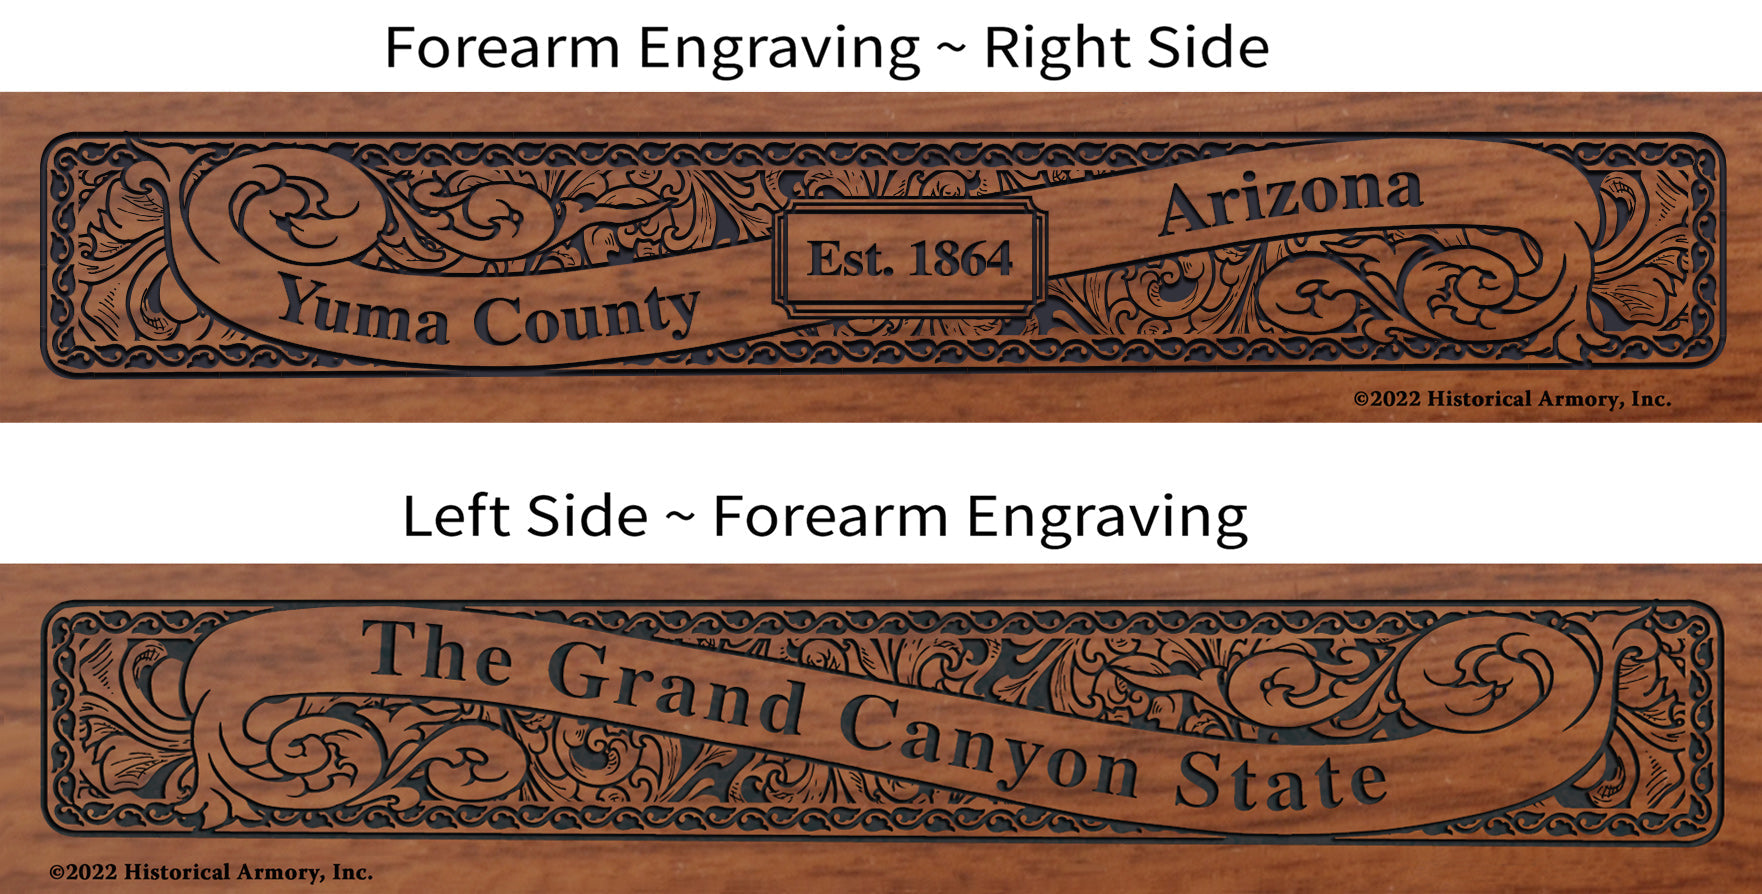 Yuma County Arizona Engraved Rifle Forearm